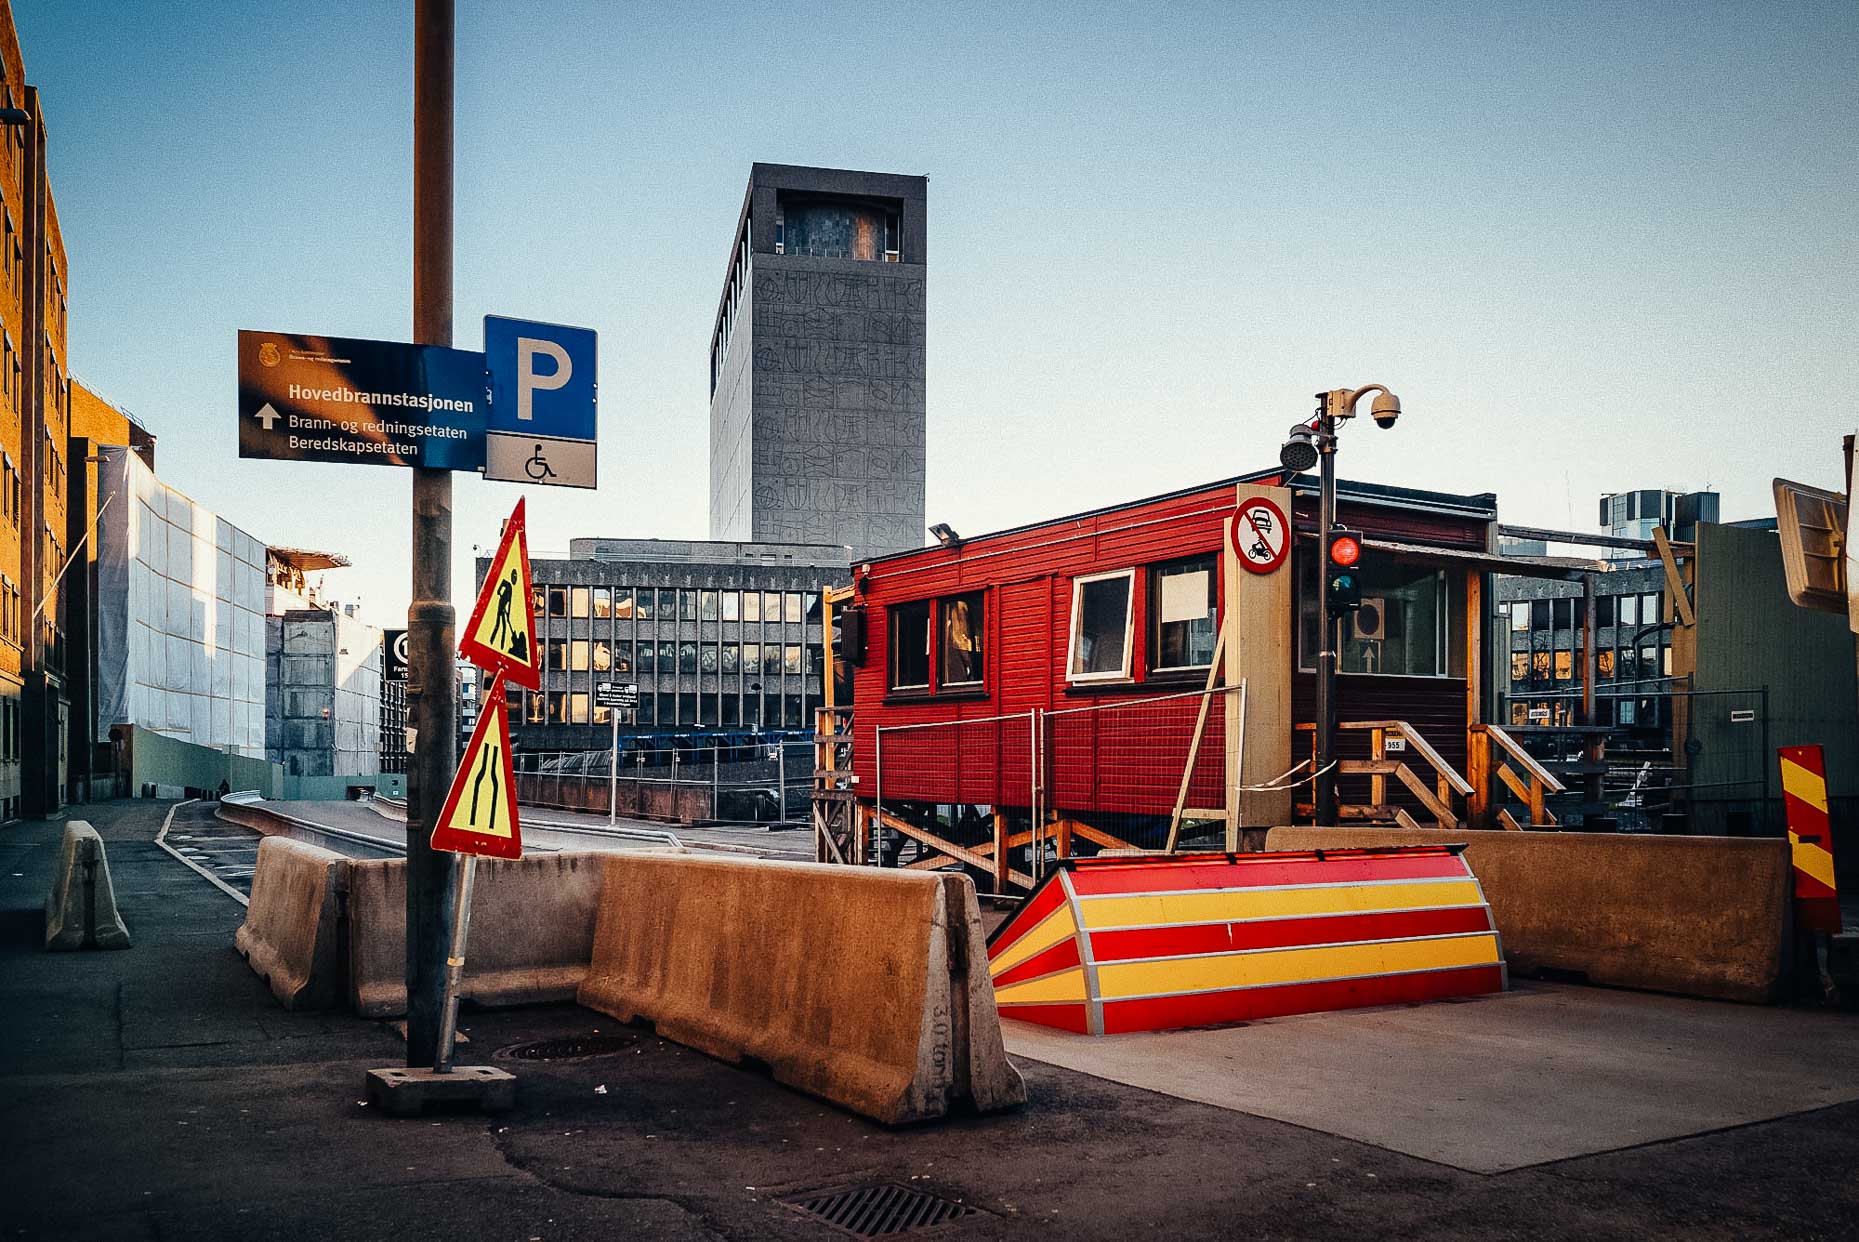 ILJA C. HENDEL FOTOGRAF |Feature photography from Oslo